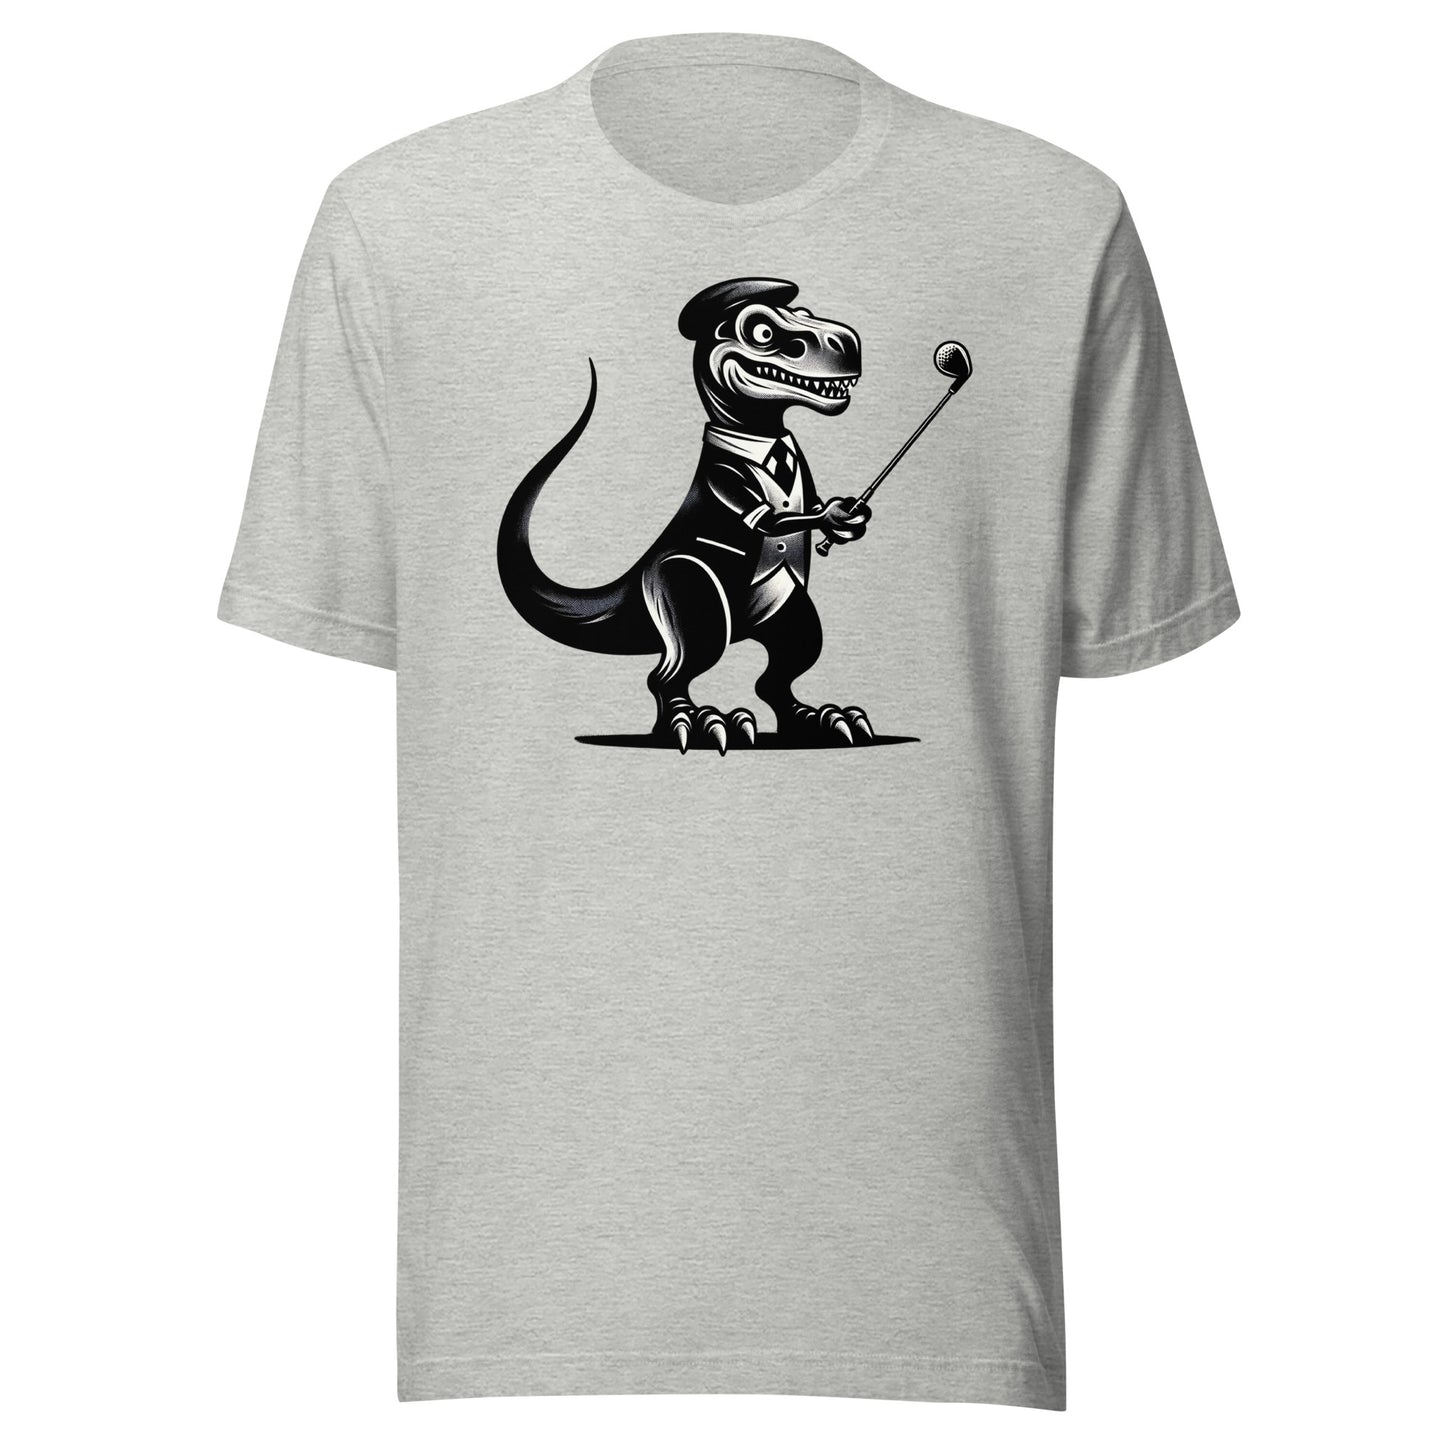 Jurassic Golfer: T-Rex on the Greens - Monochrome Golfing Dinosaur Unisex t-shirt